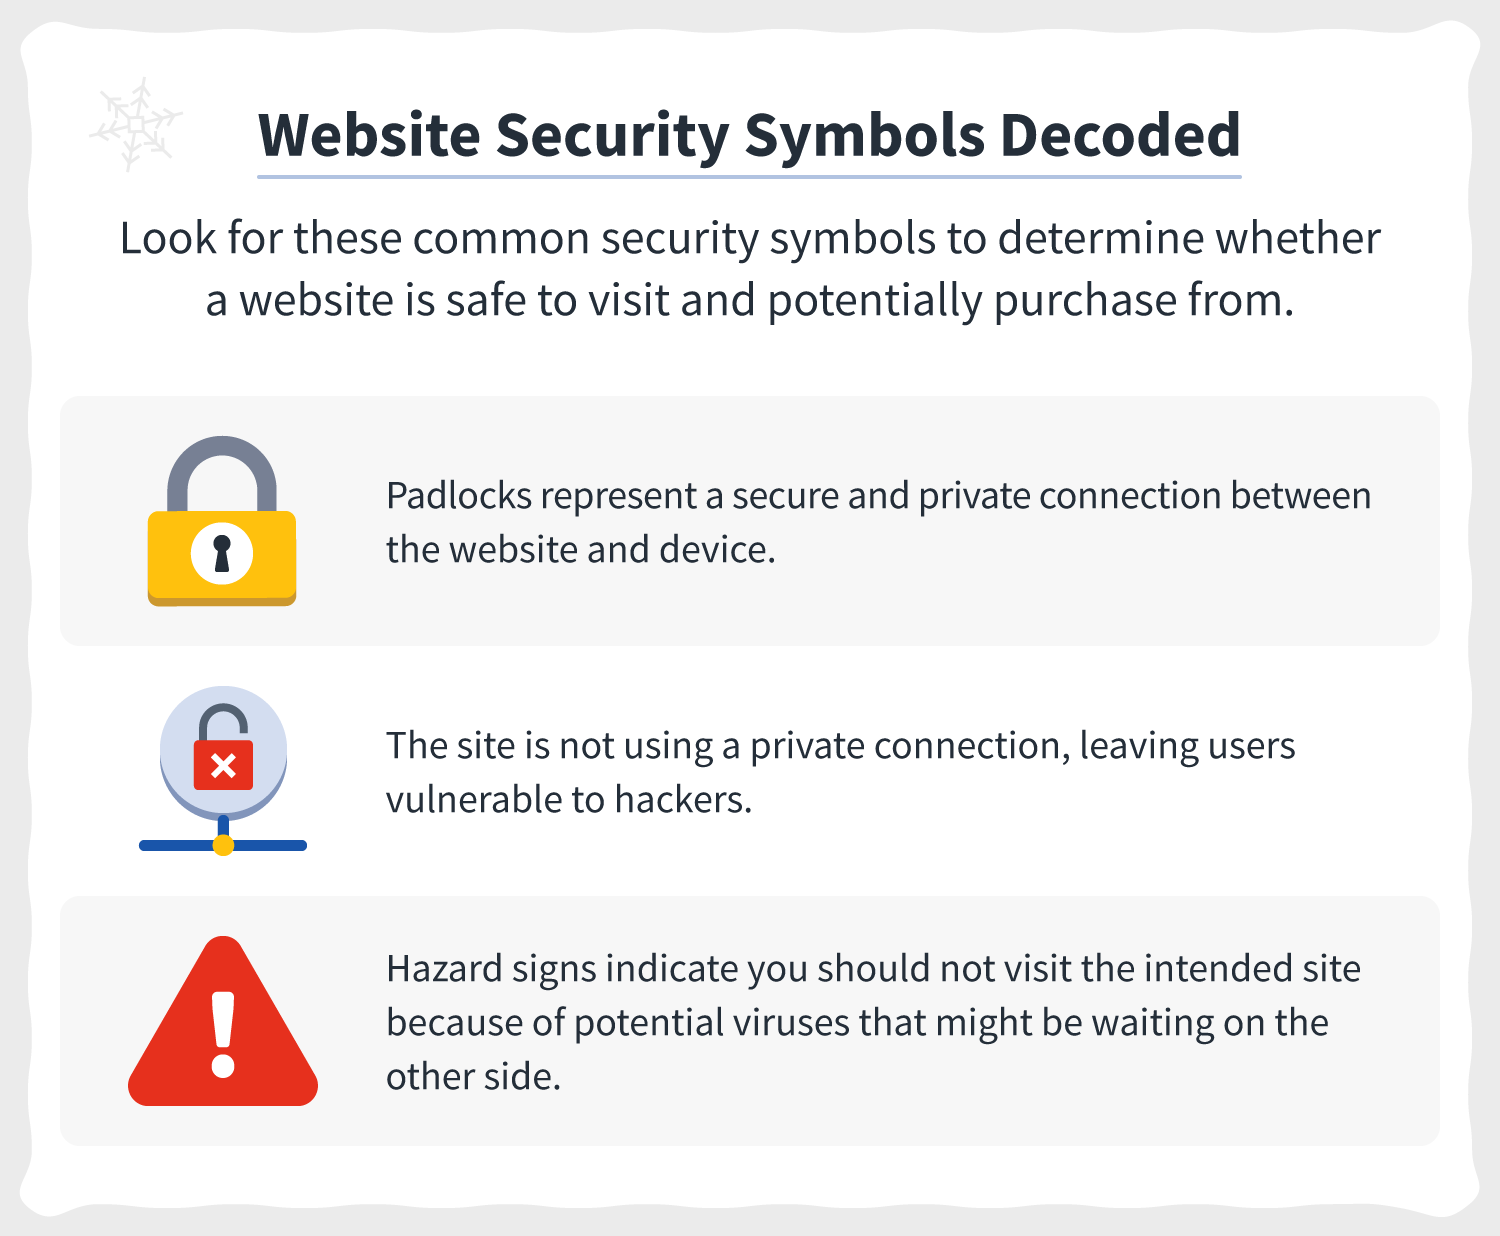 Website security symbols decoded